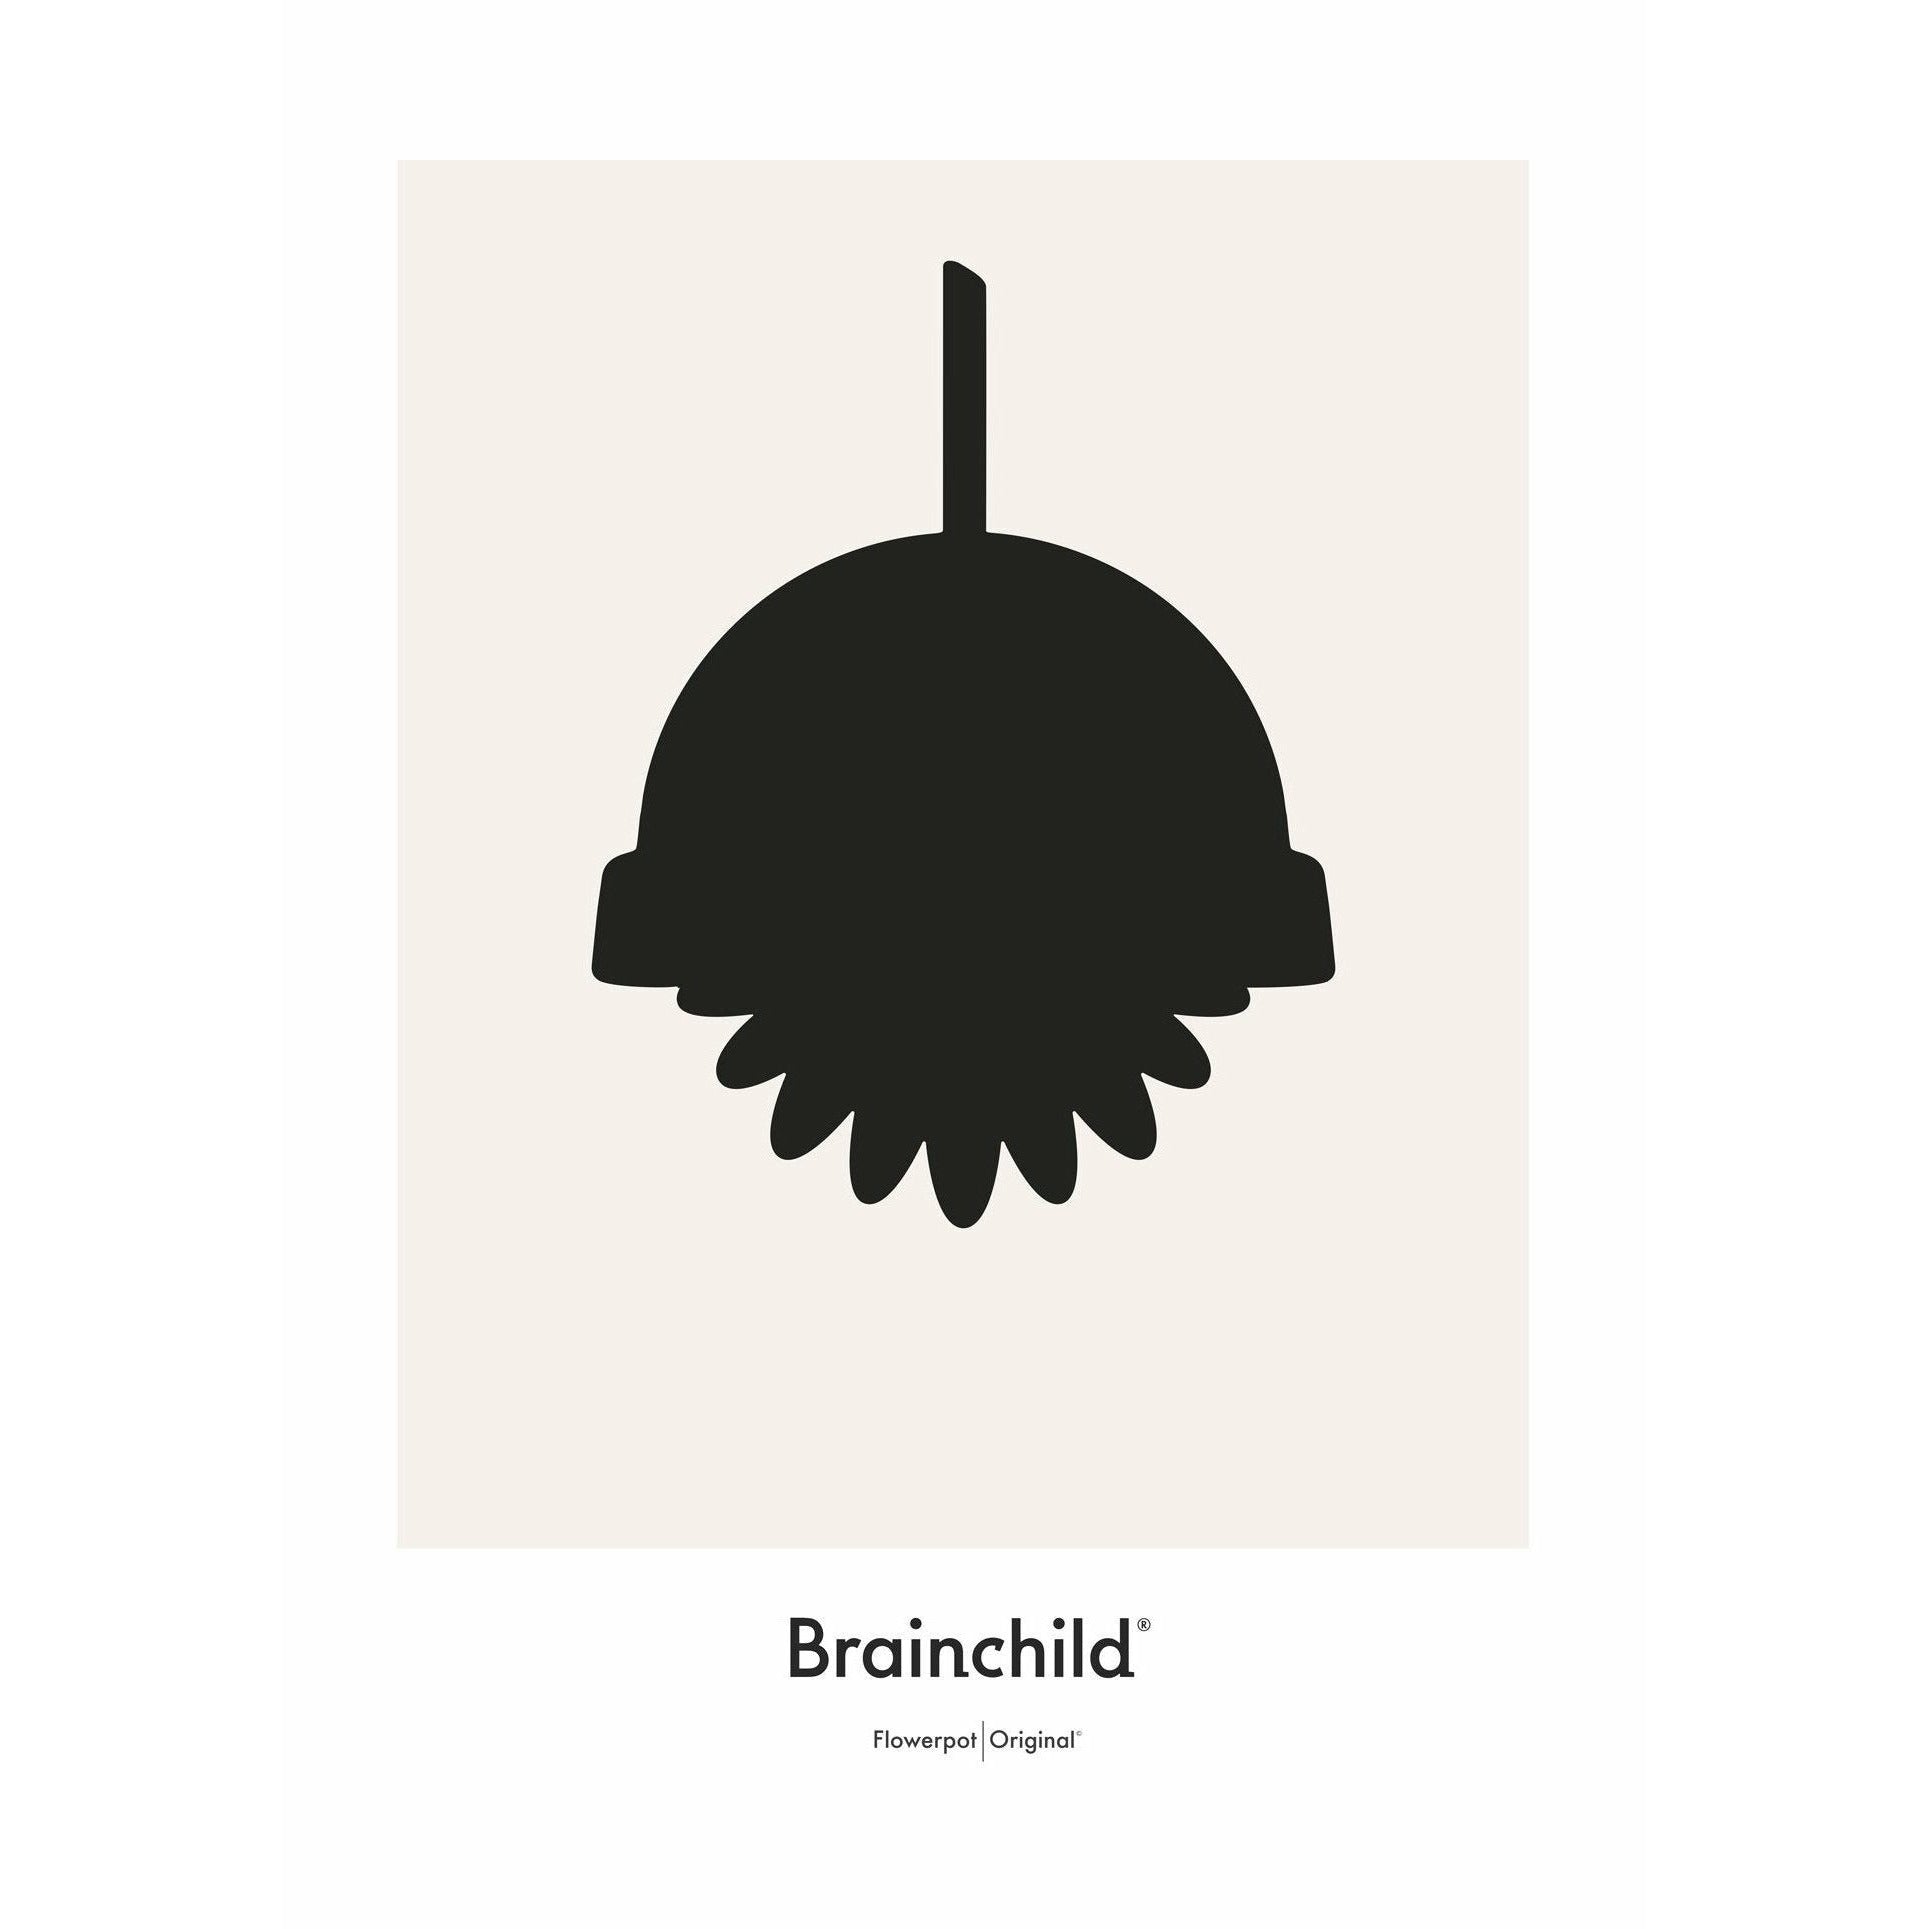 Plakát pro design Brainchild Flowerpot Design bez rámu 30 x40 cm, šedá